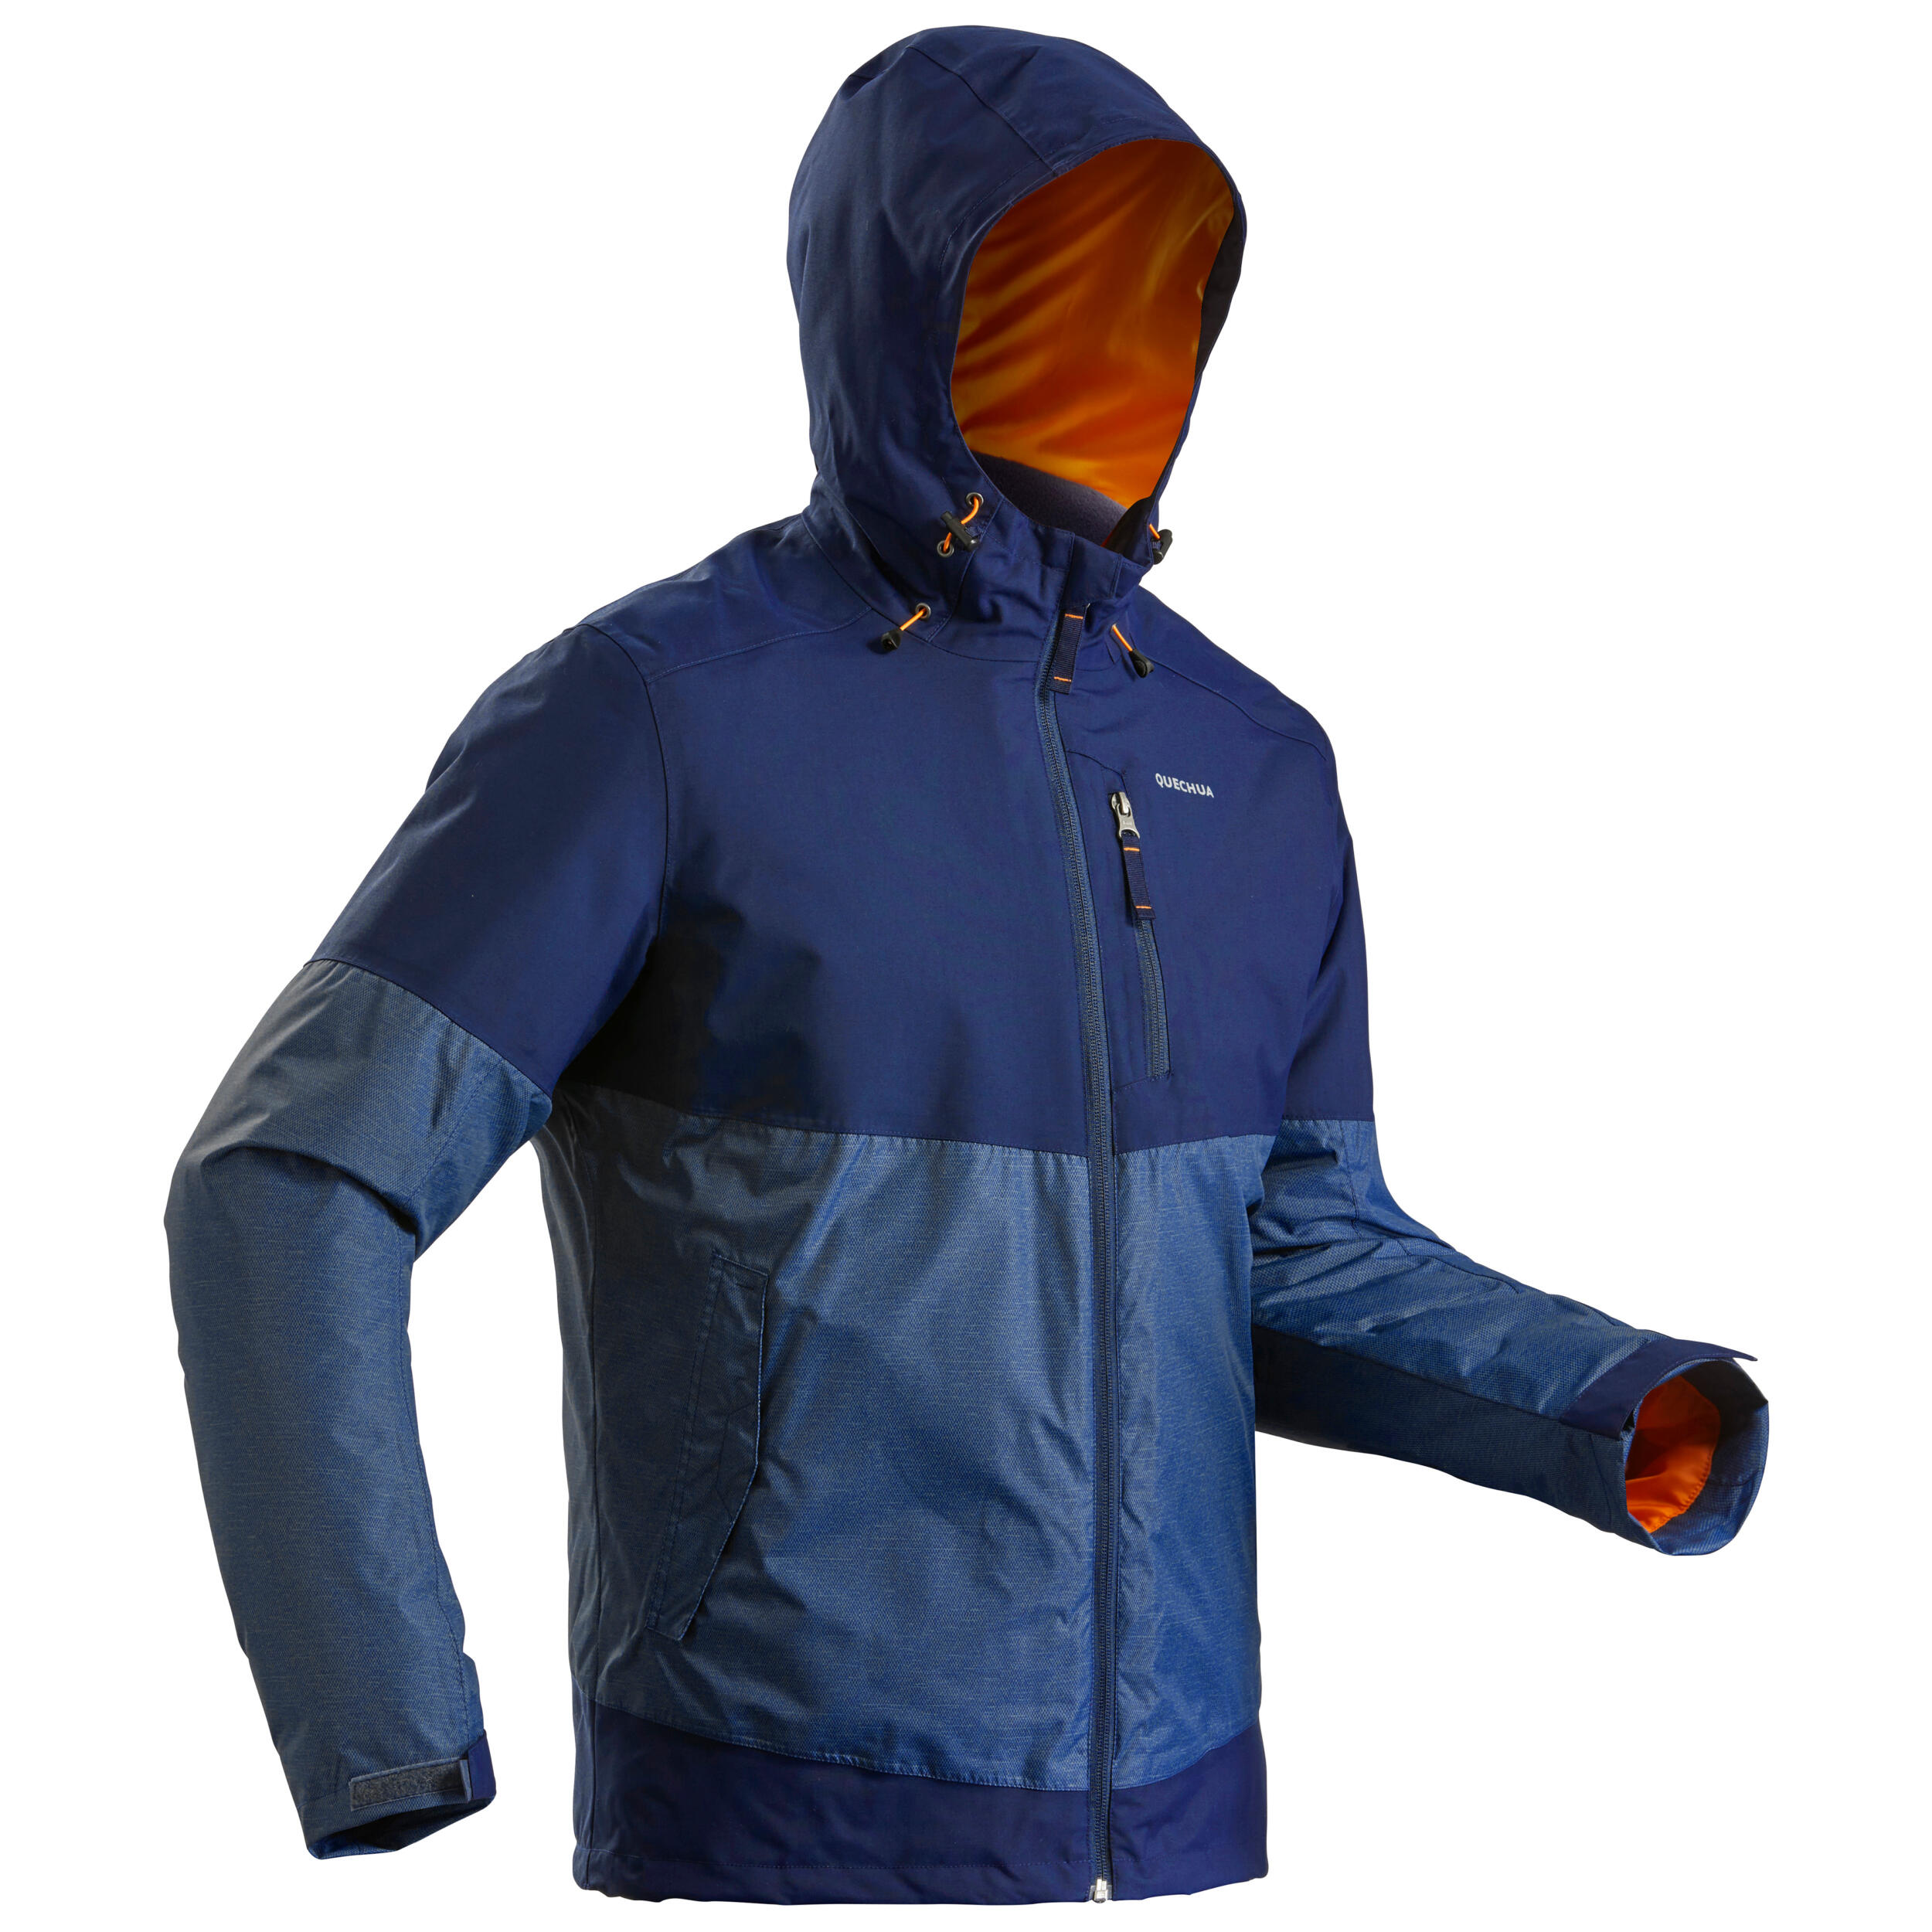 Buy Men's Waterproof Mountain Hiking Jacket MH500 Online | Decathlon